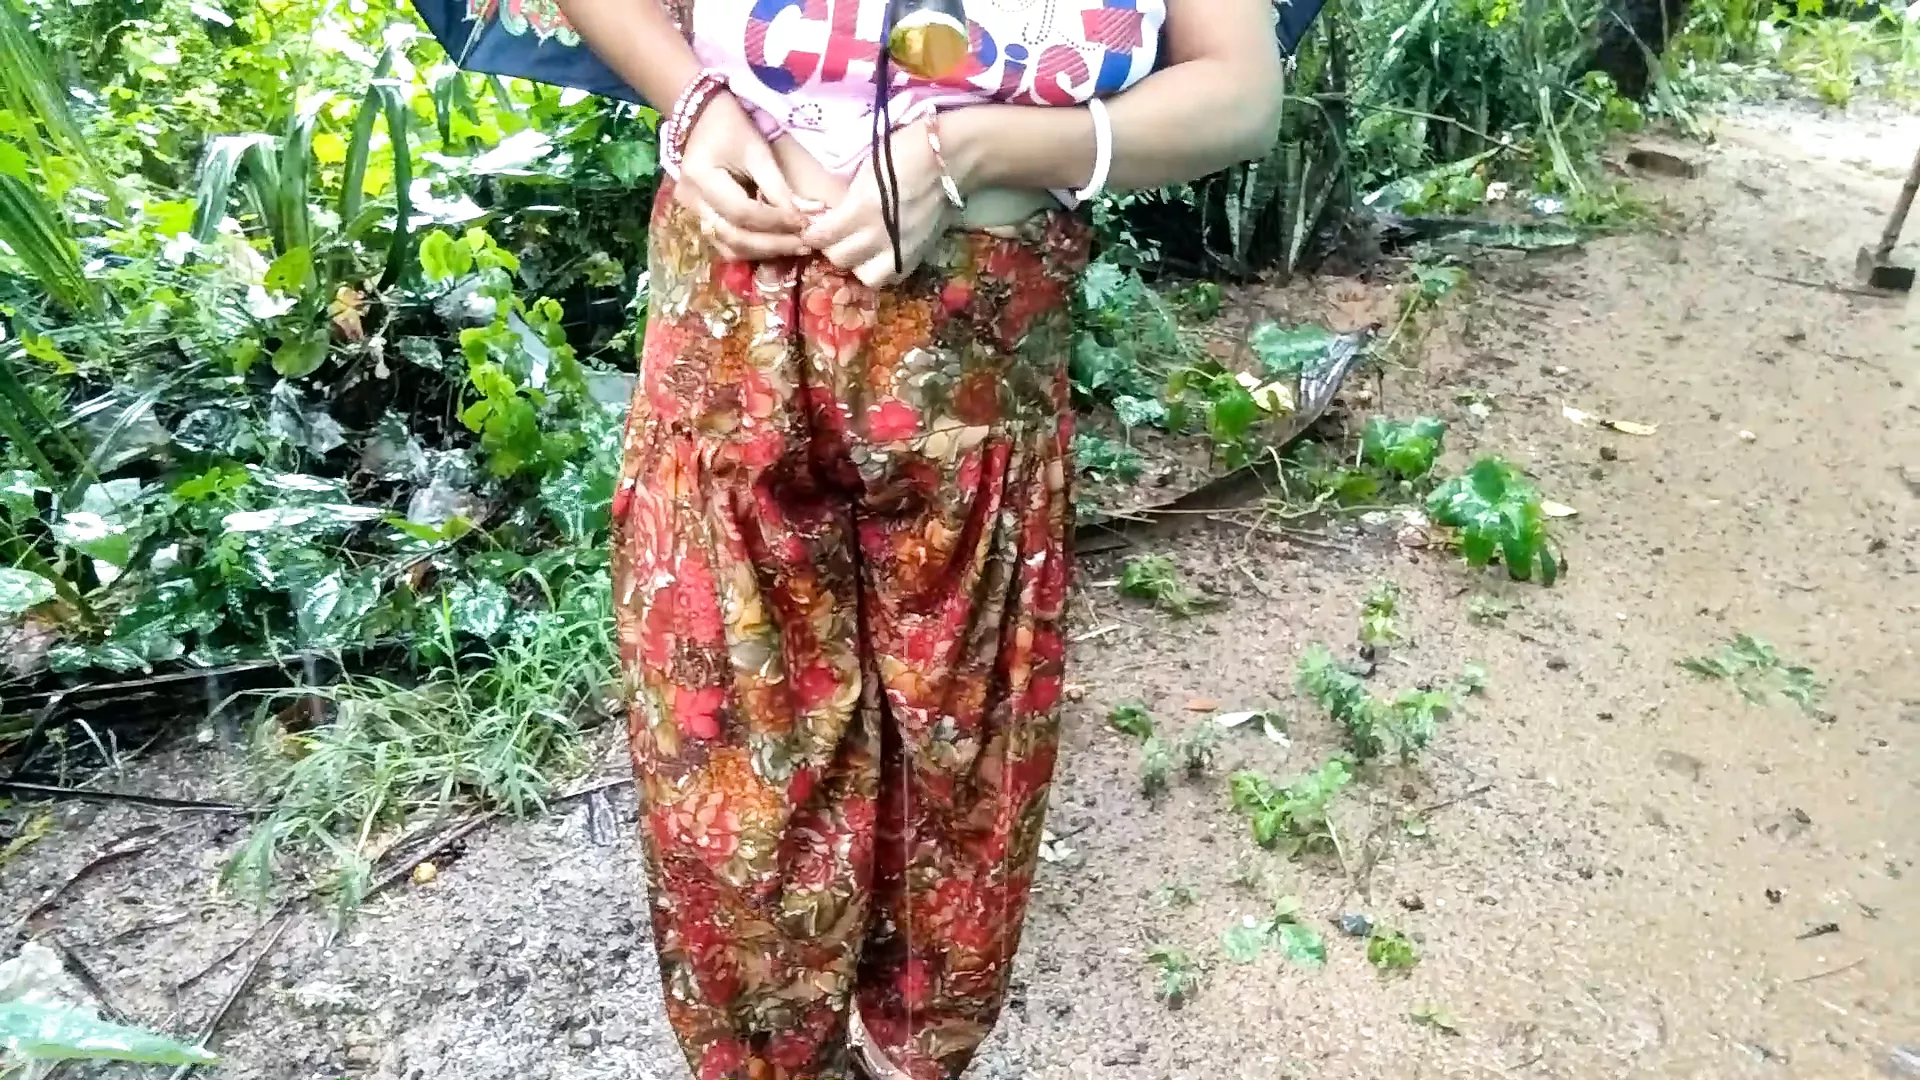 Aunty Peeing Outdoor Hidden Videos - Desi Indian Bhabhi Outdoor Public Pissing Video Compilation | xHamster